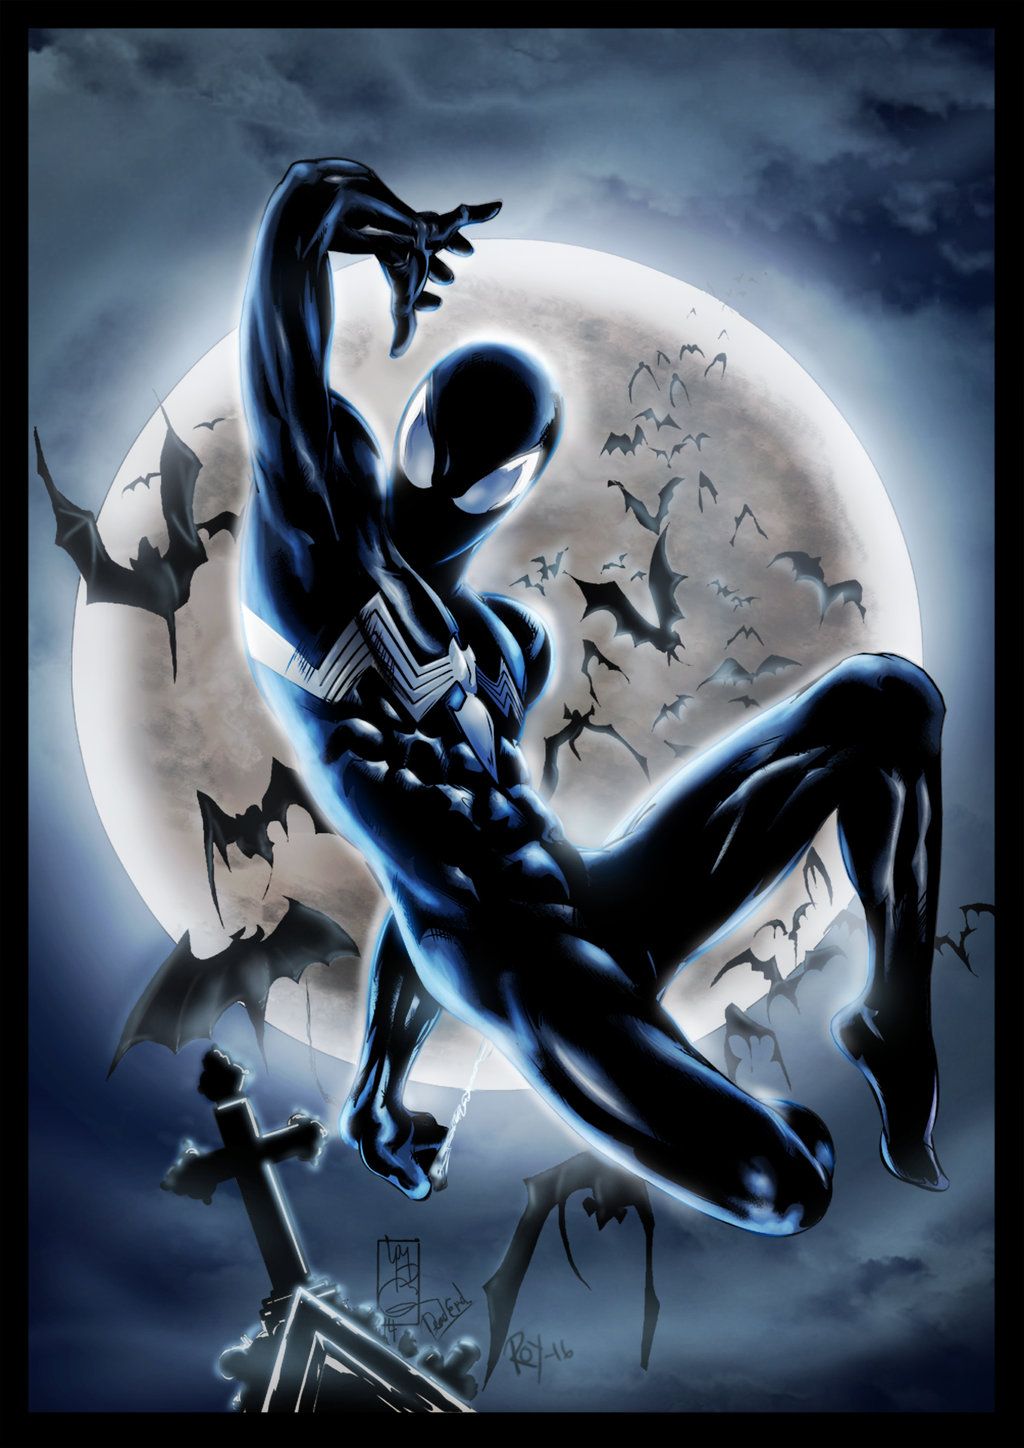 Spiderman Black Suit Wallpaper